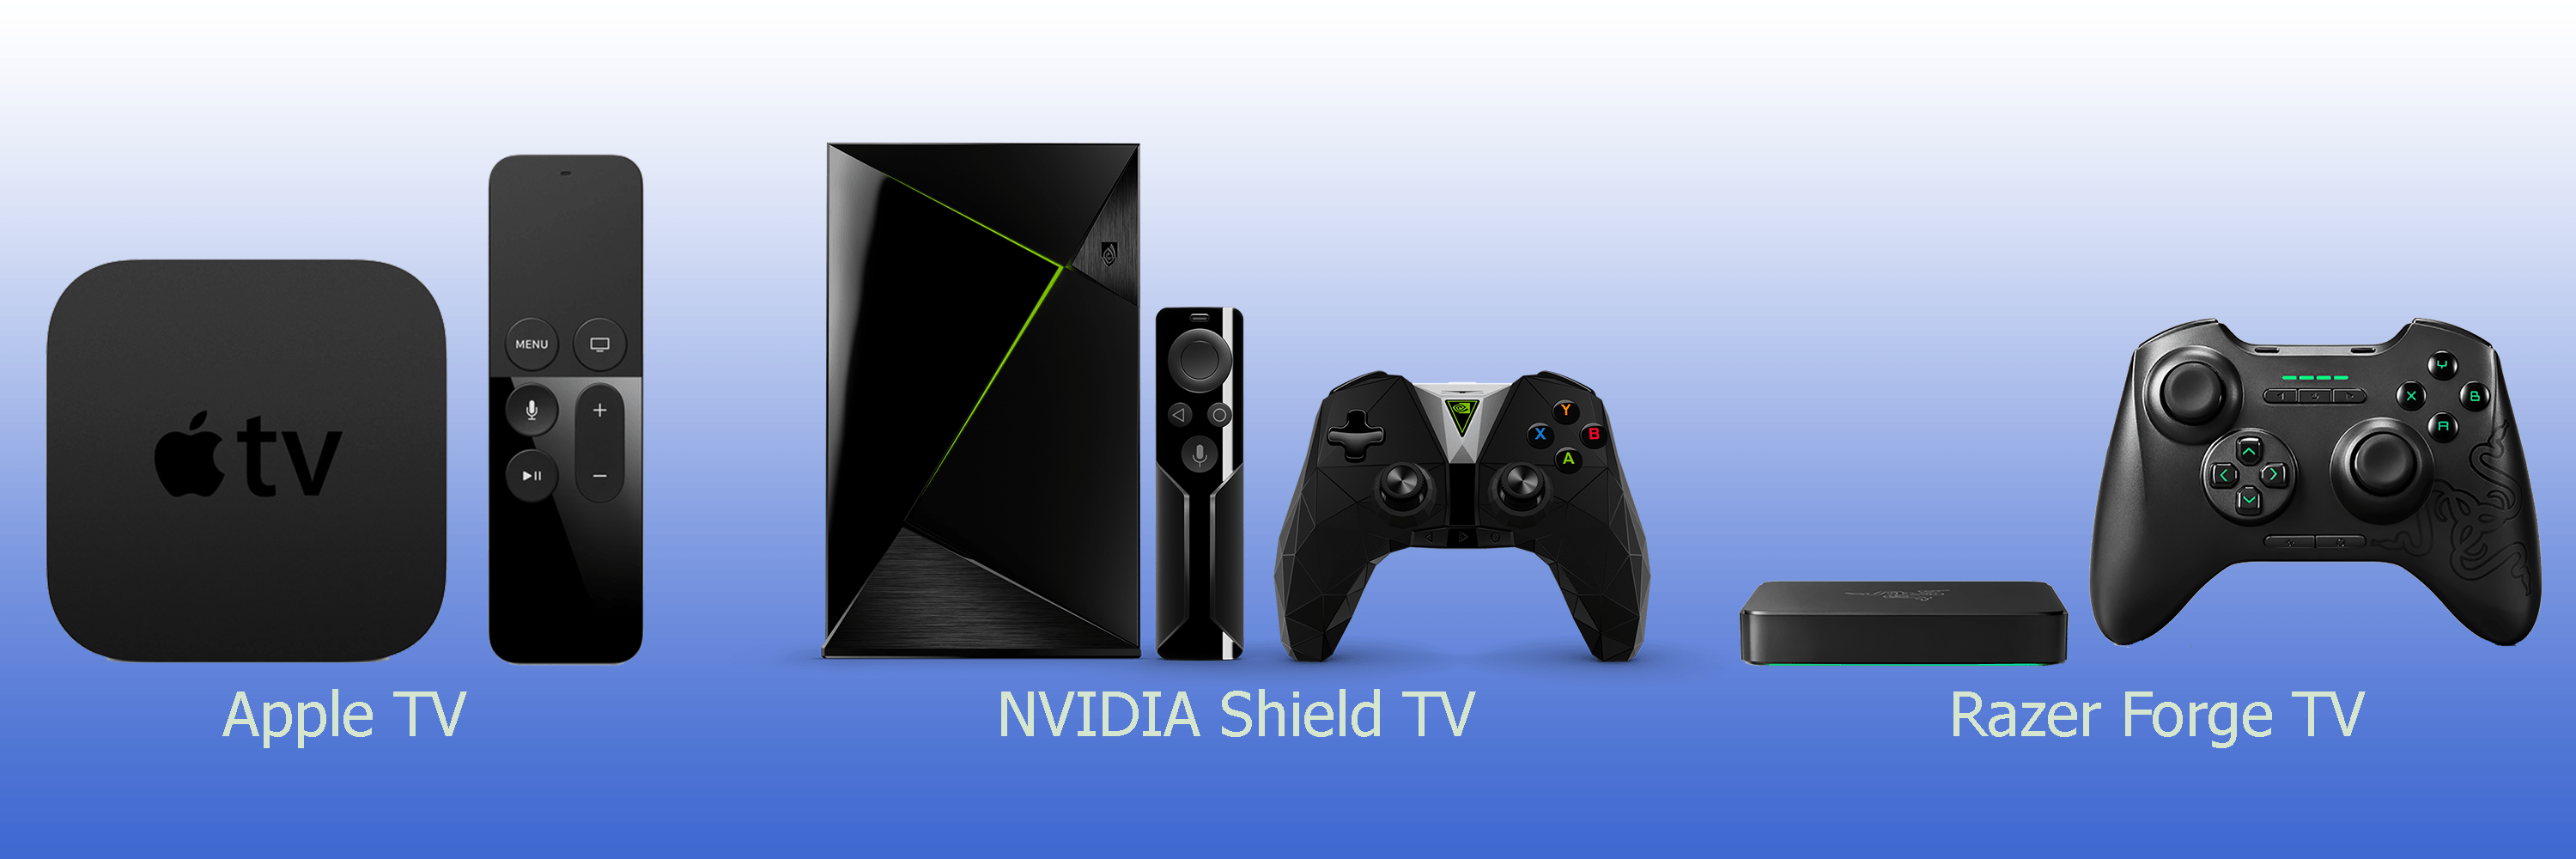 Nvidia Shield TV vs Apple TV vs Razer Forge TV : comparatif de 3 boîtiers multimédias